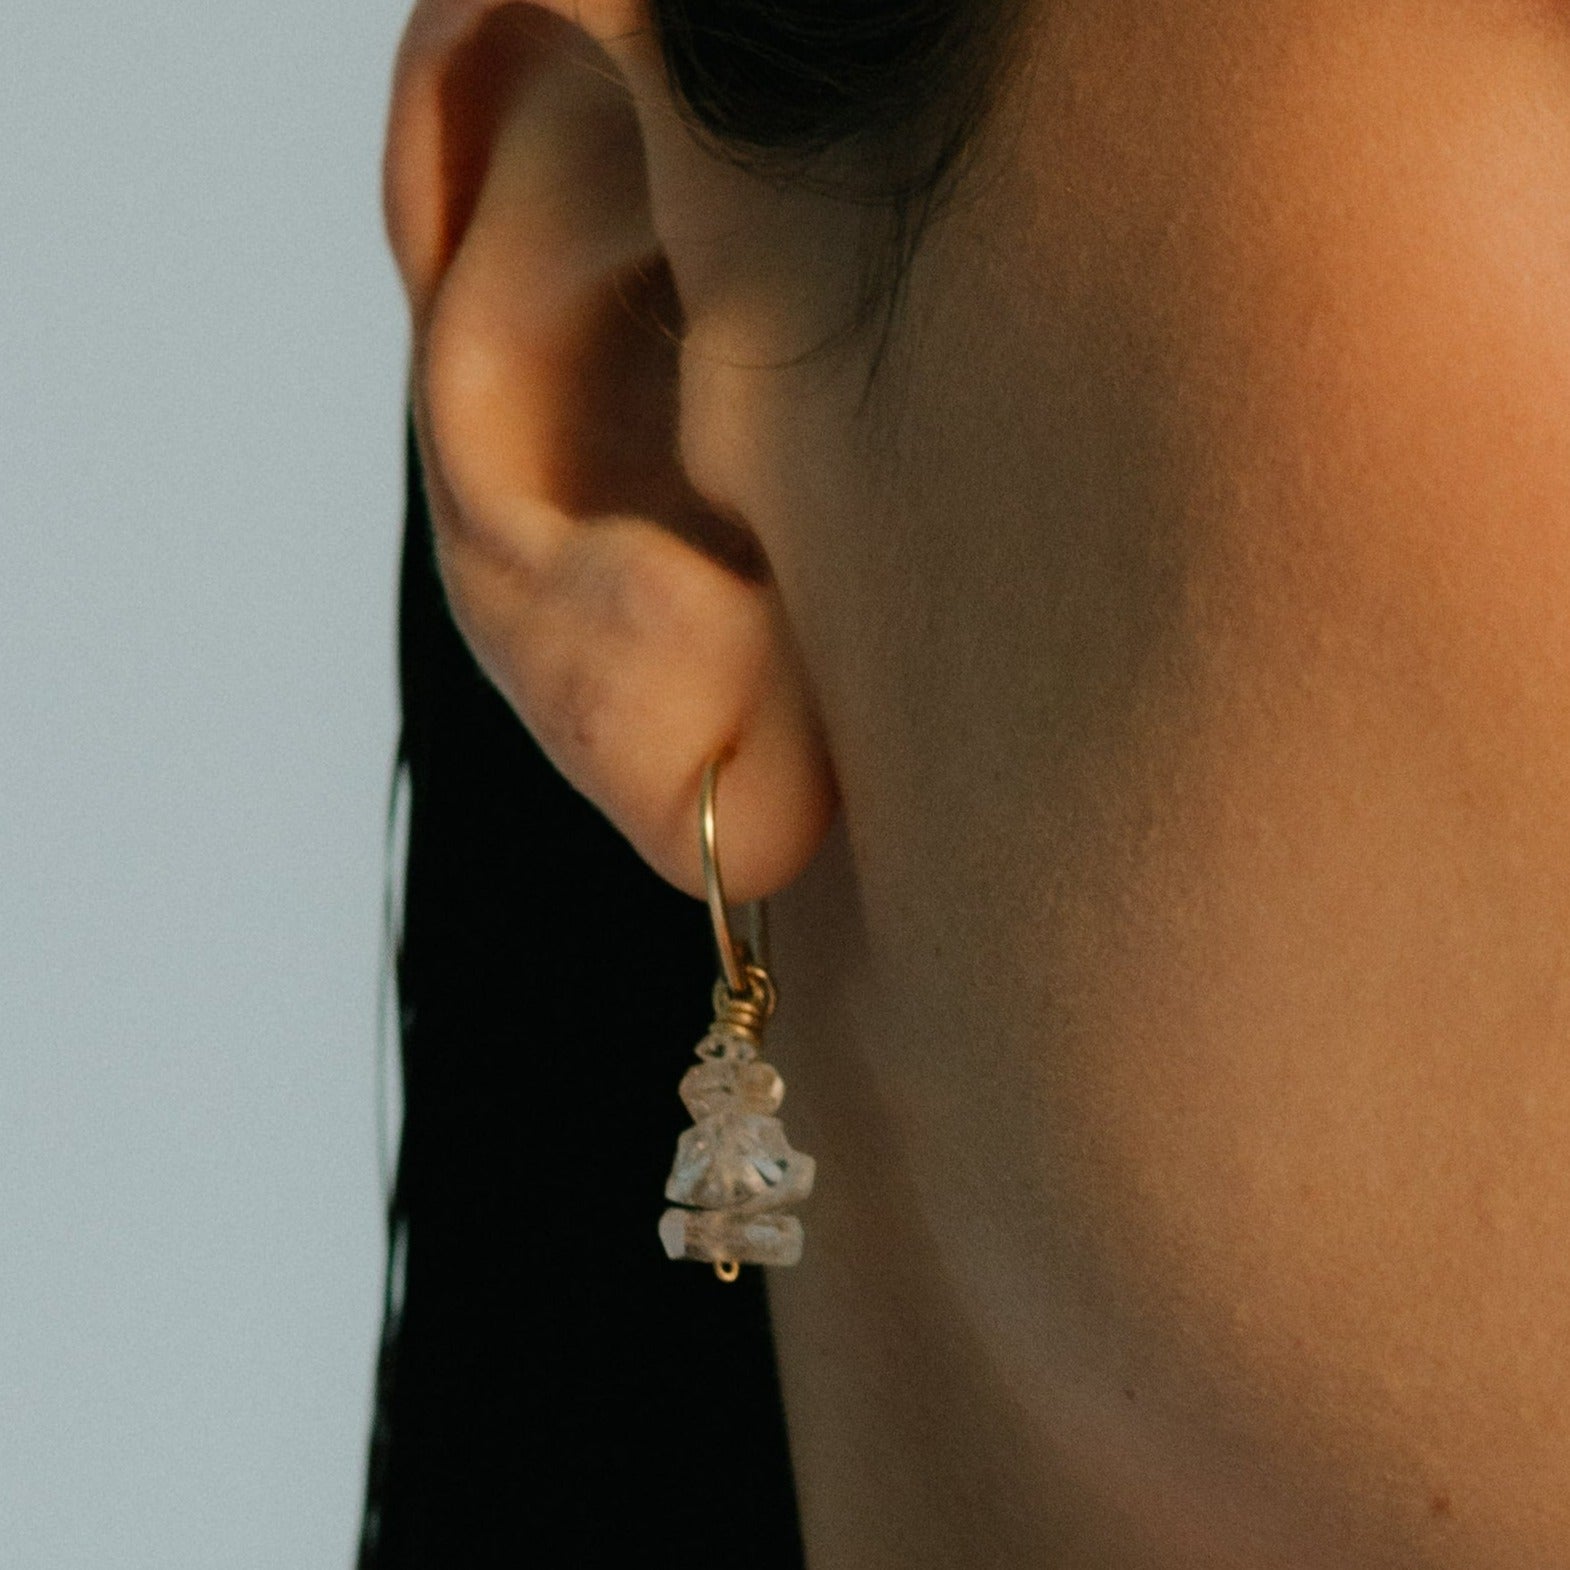 Lira Dangle Earrings #1 (30mm) - Diamond Quartz Earrings TARBAY   